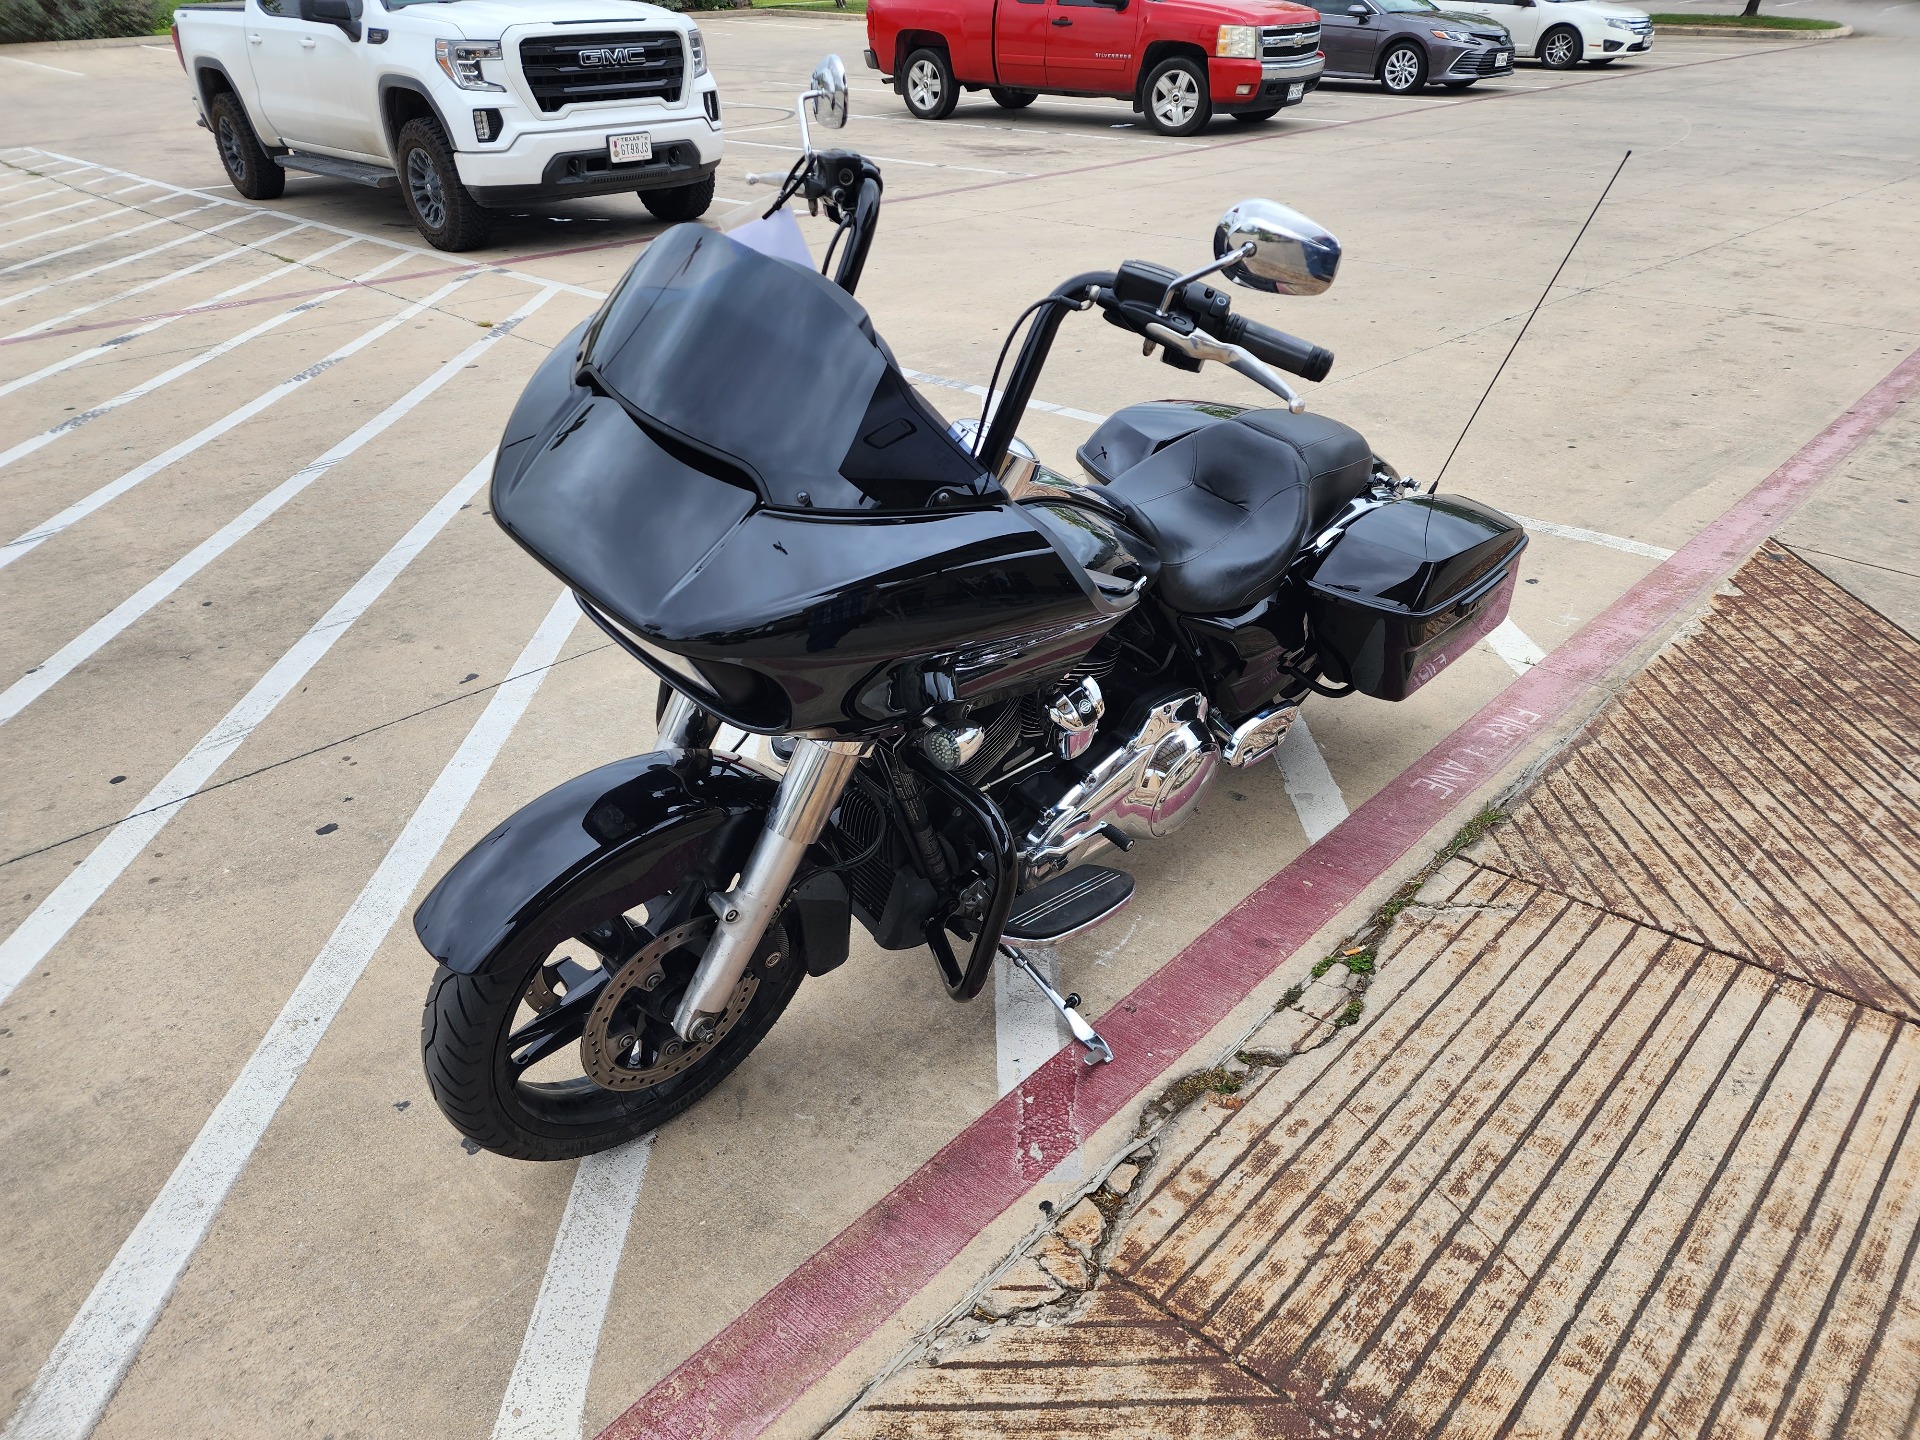 2019 Harley-Davidson Road Glide® in San Antonio, Texas - Photo 4